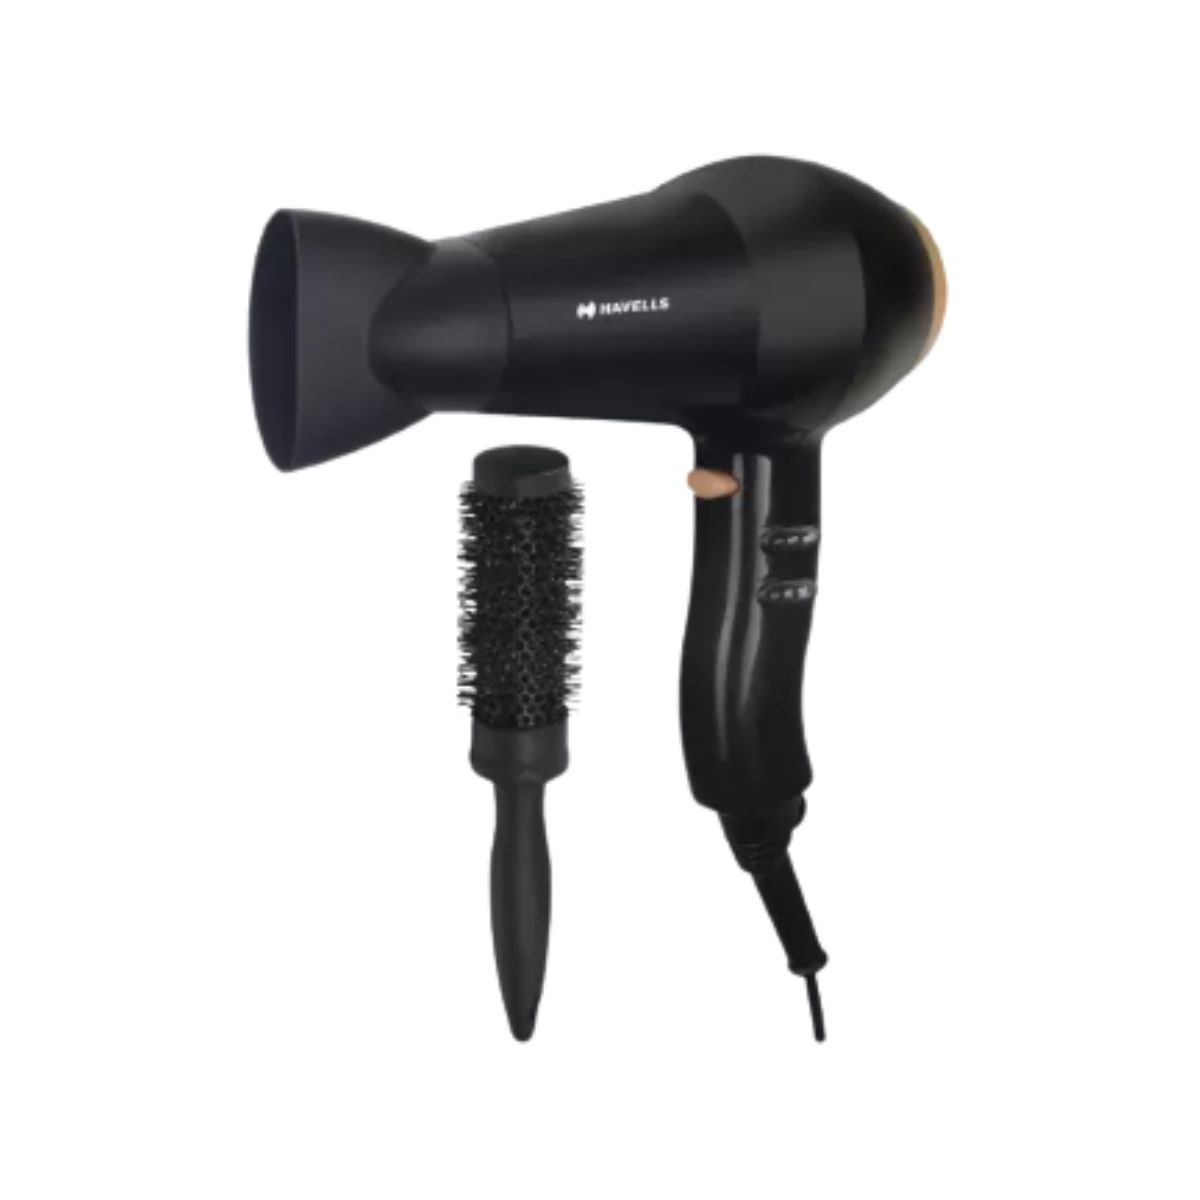 Havells - Hair Dryer with Free Round Hair Brush - HD3276 - Black